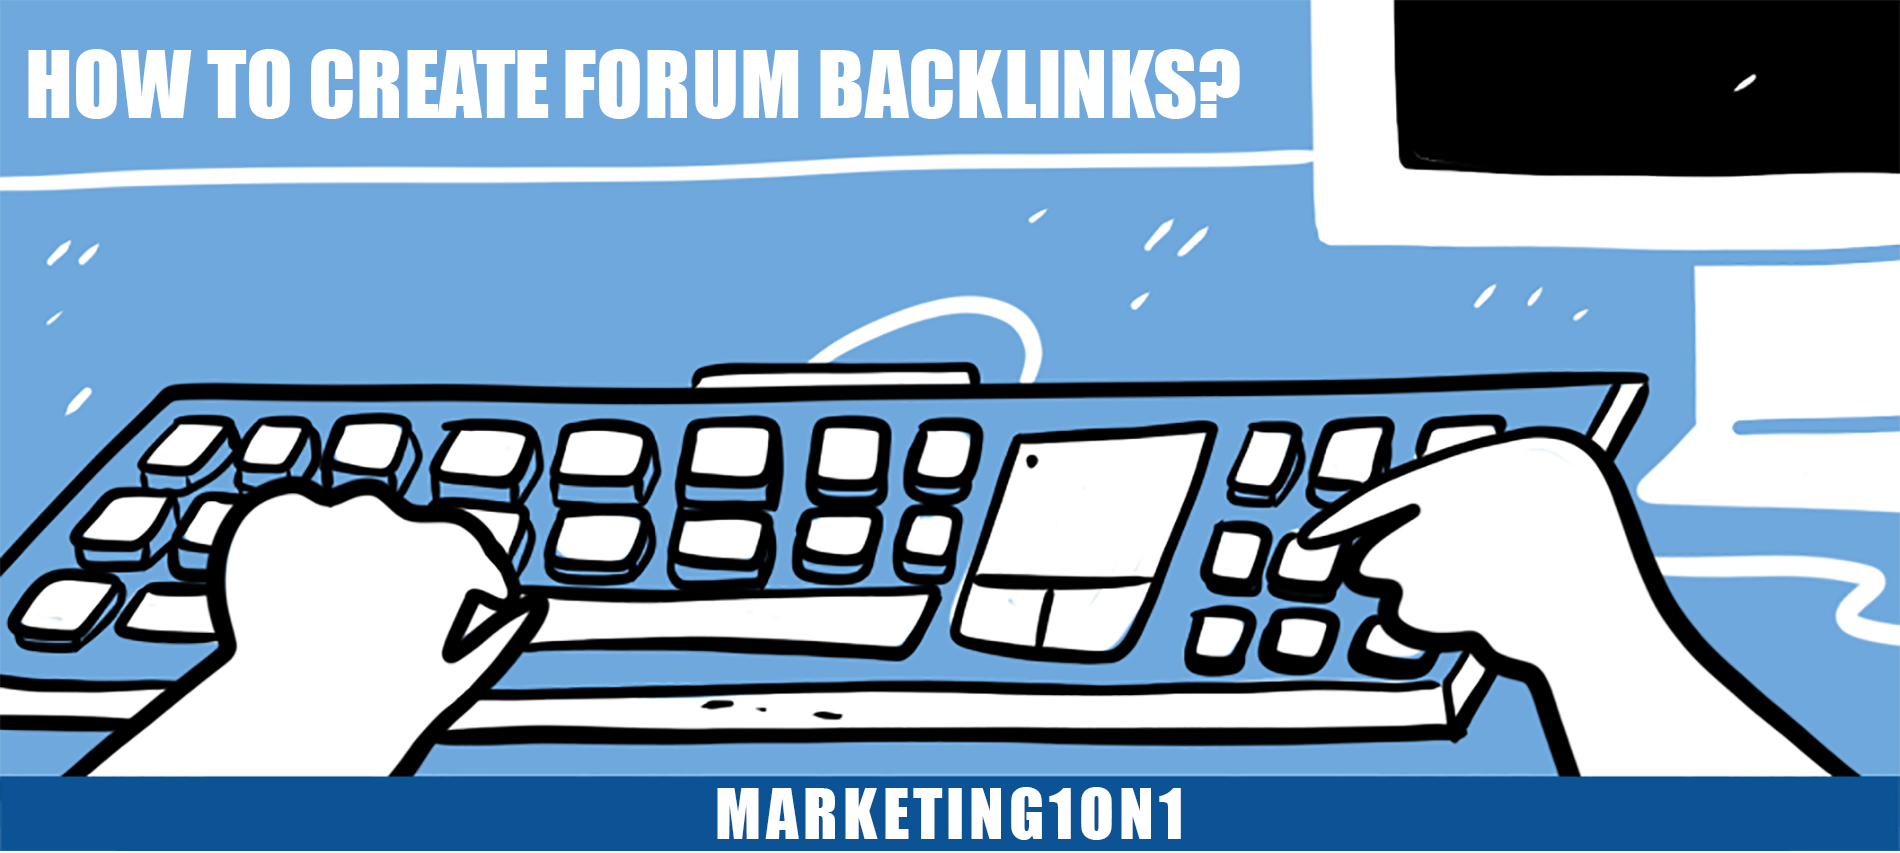 How to create forum backlinks?